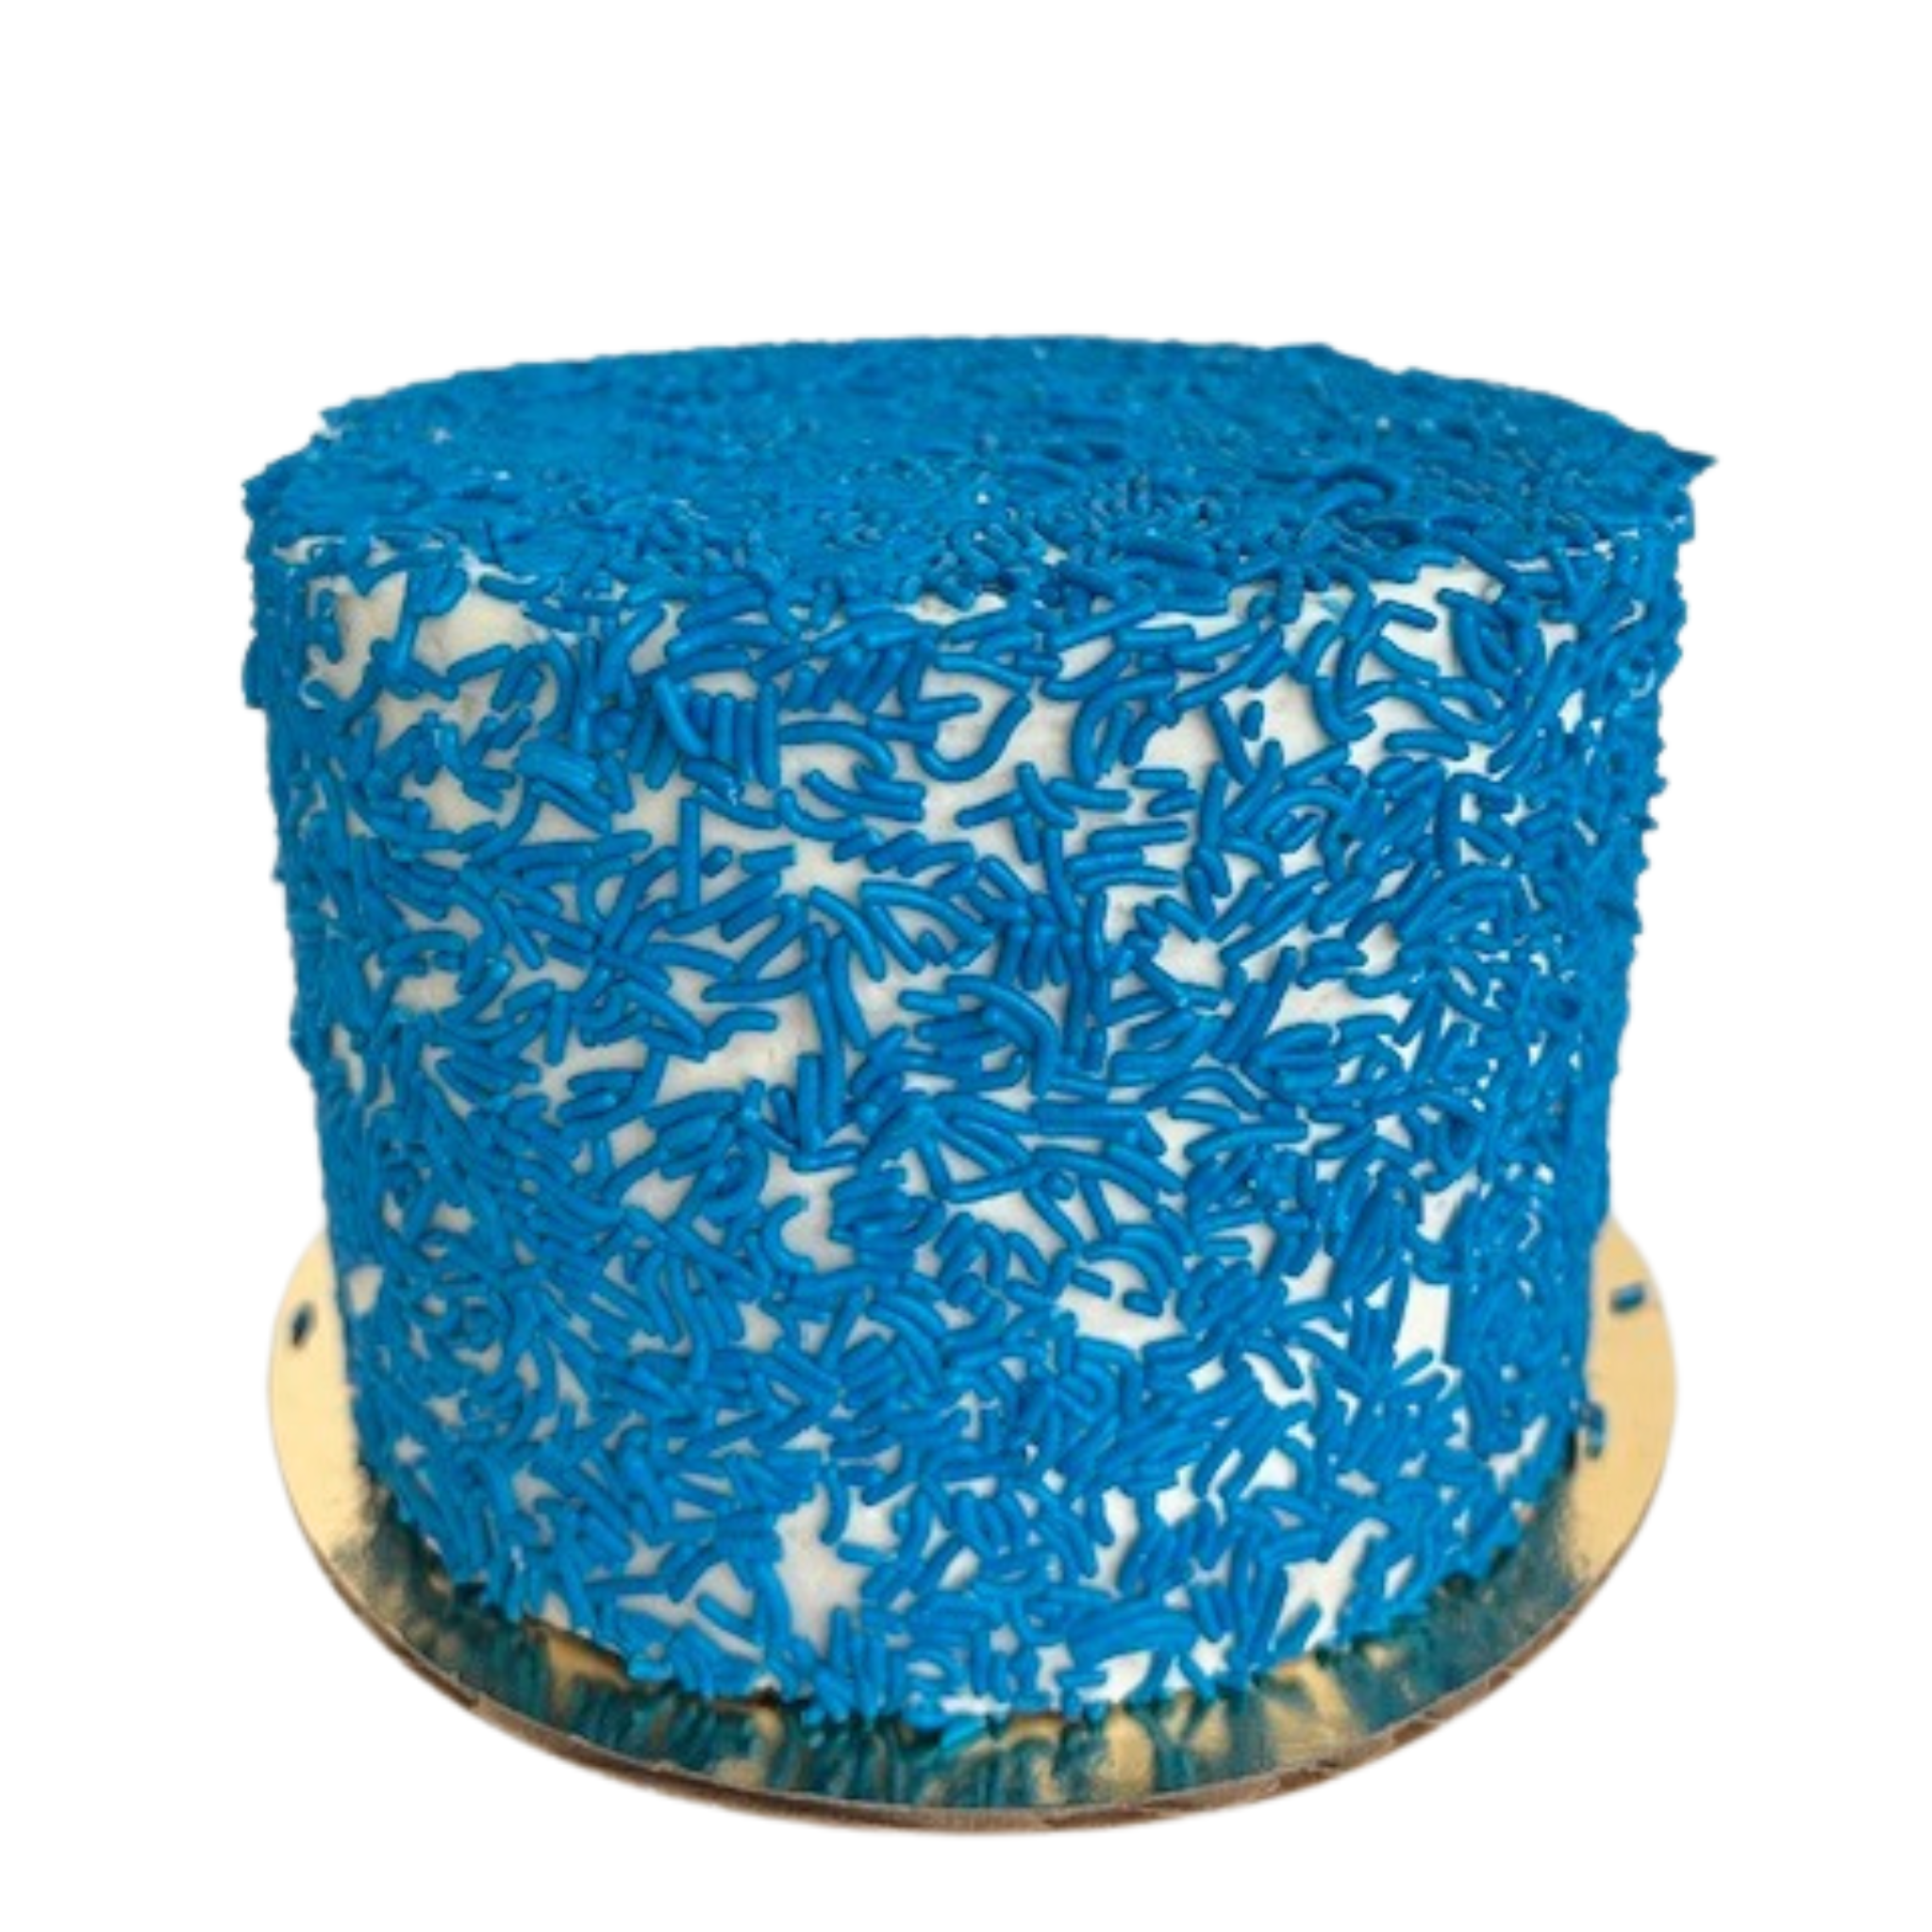 Smash Cake - Blue